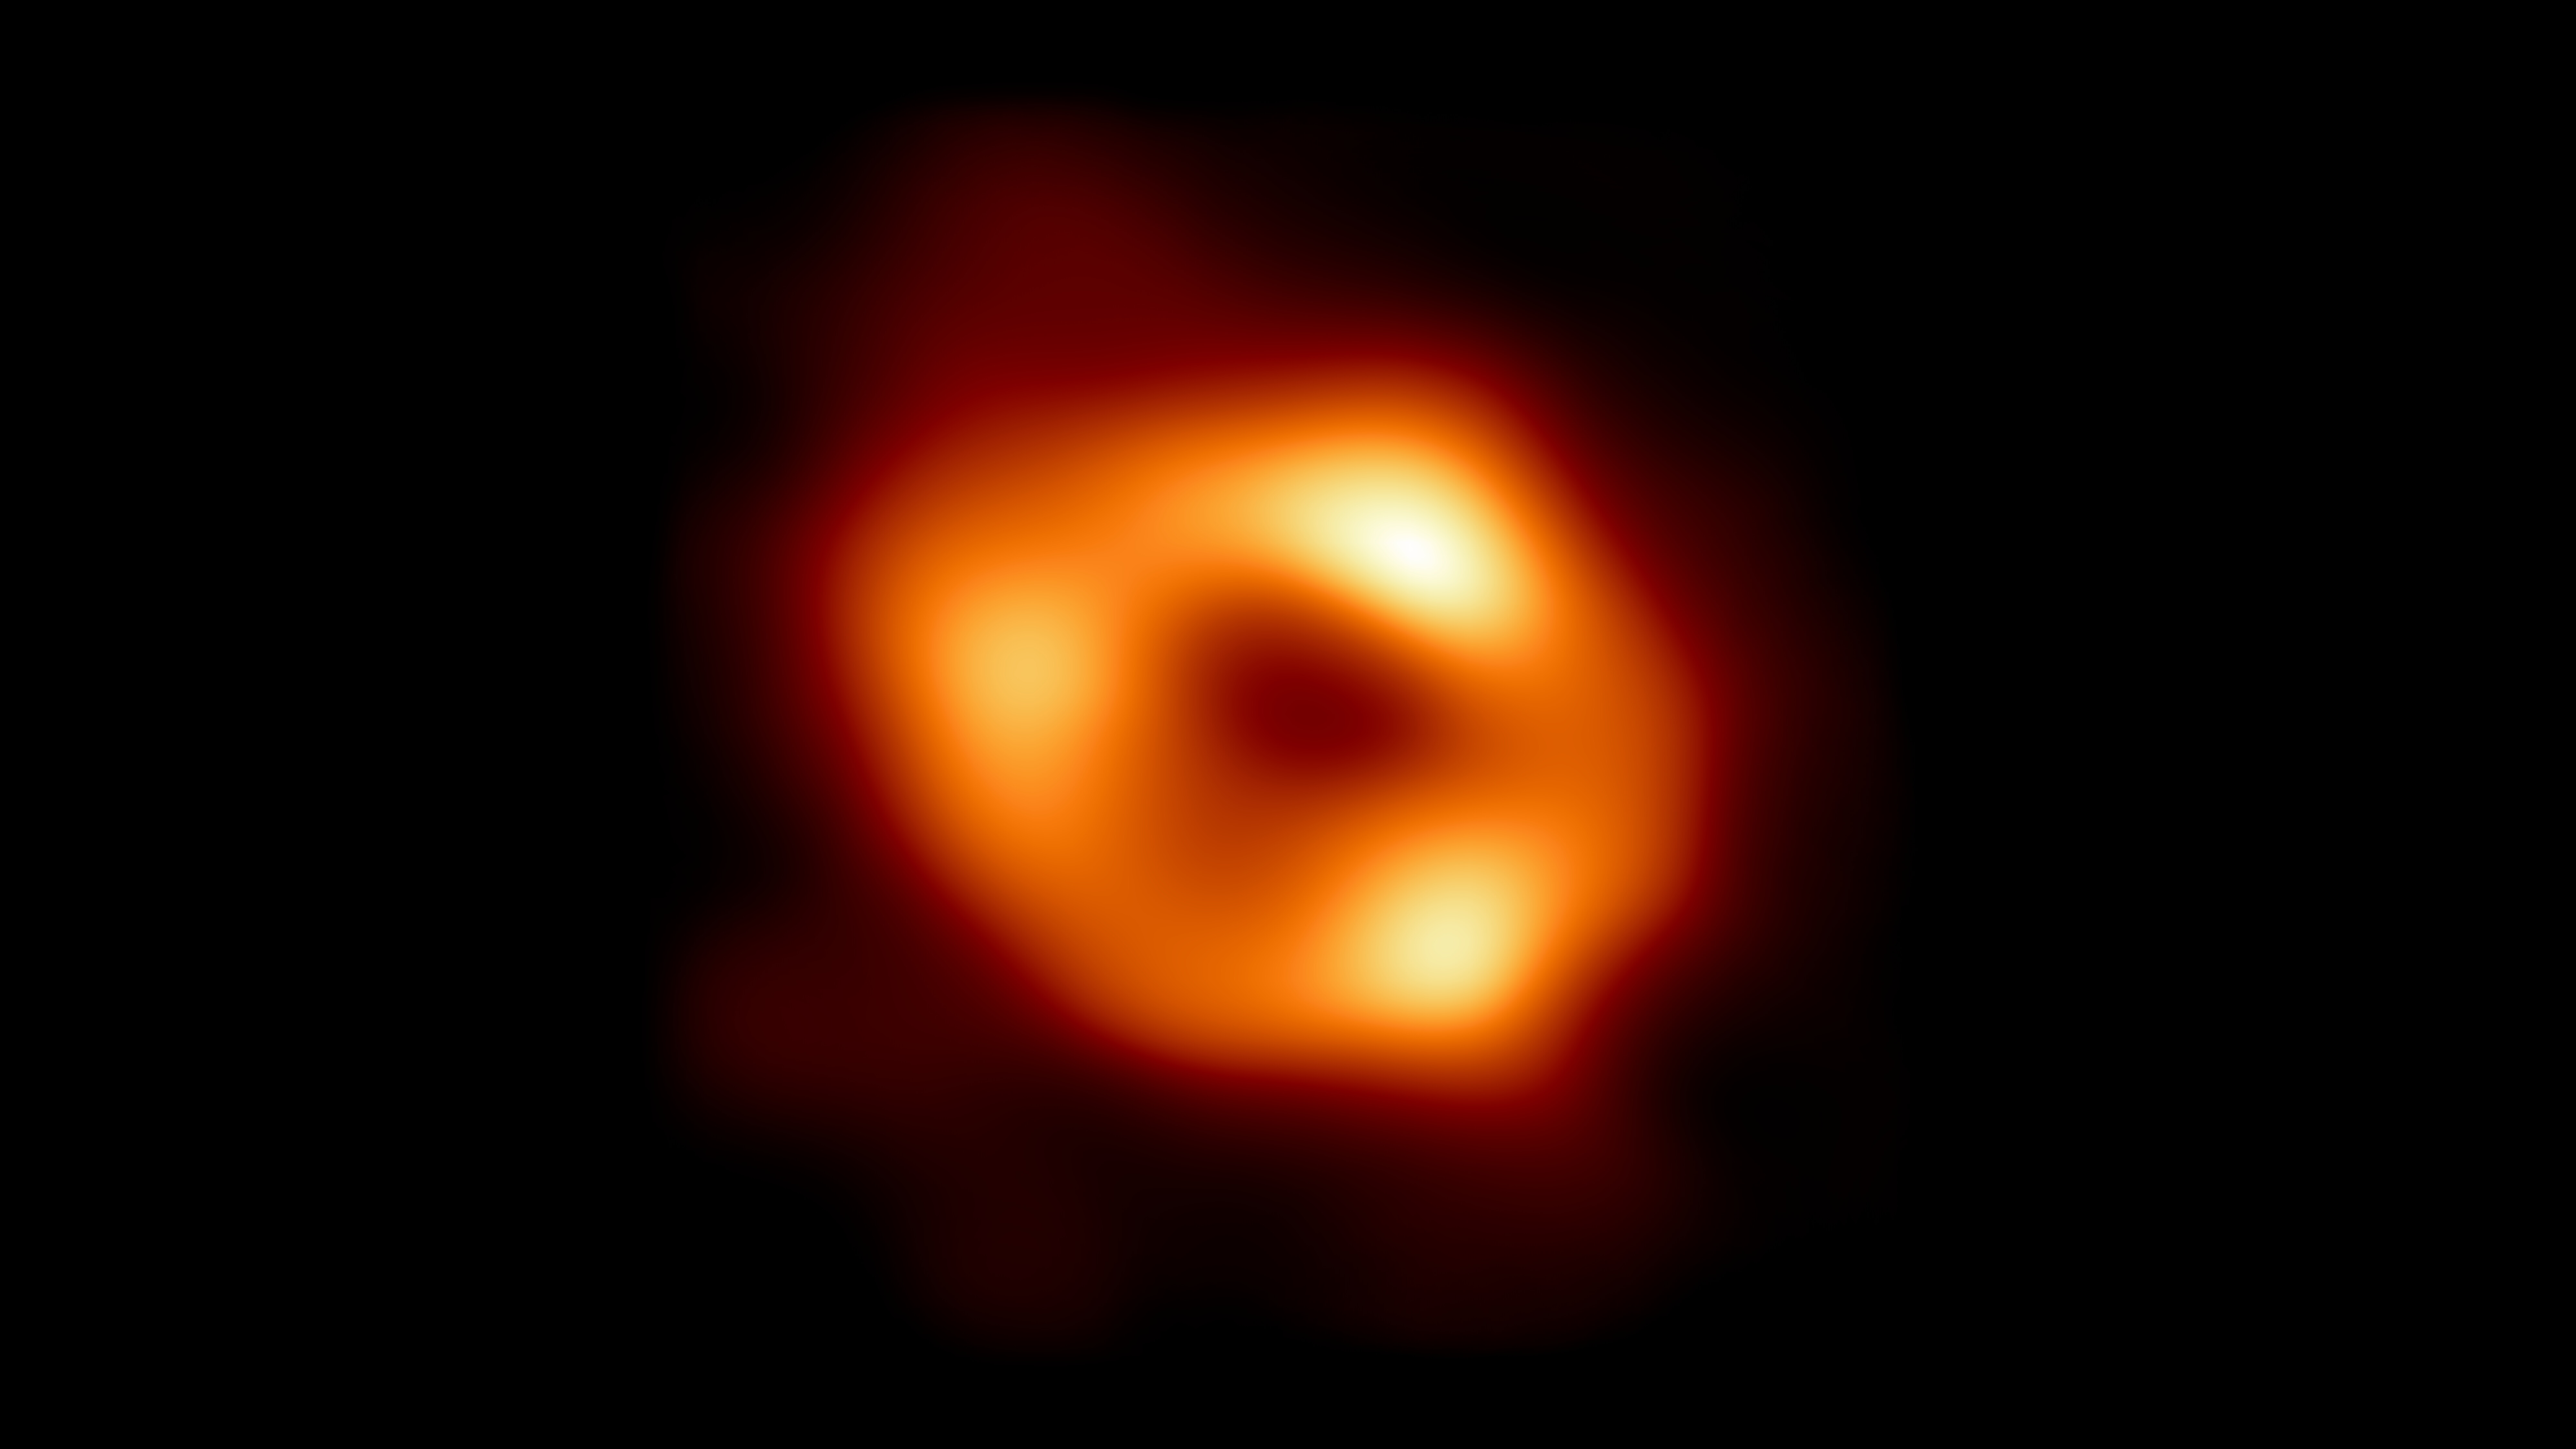 SgrA* black hole image